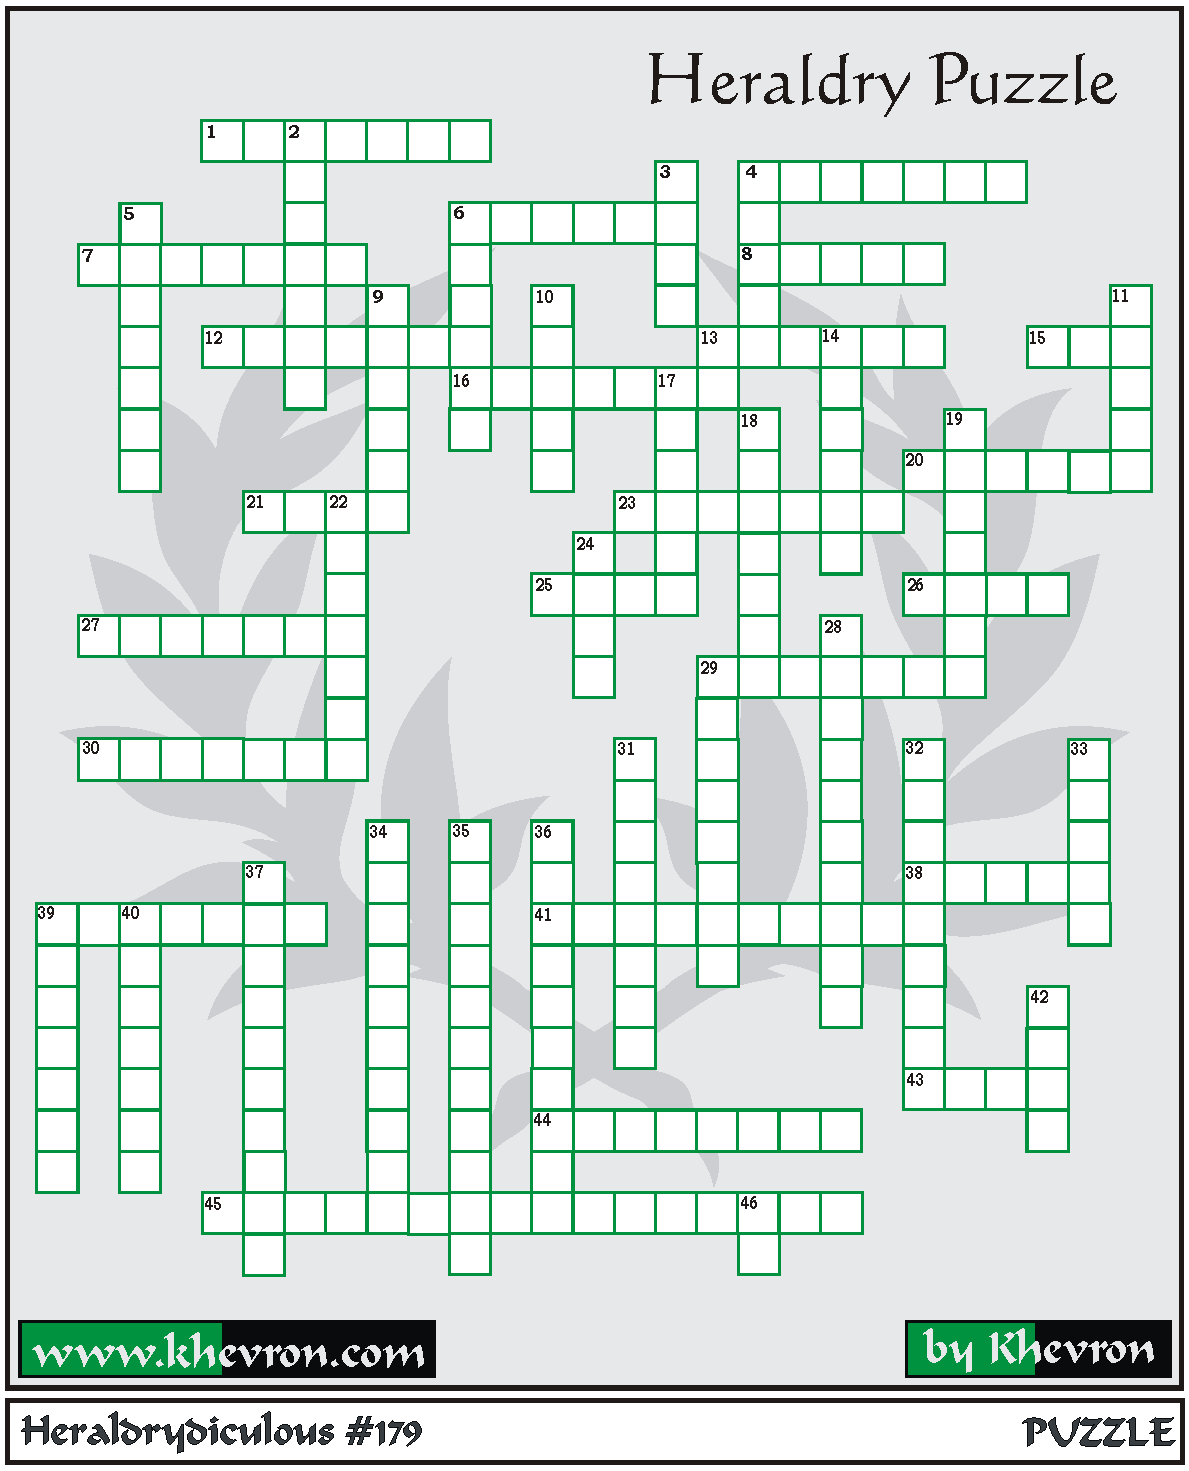 Heraldrydiculous Puzzle by Khevron